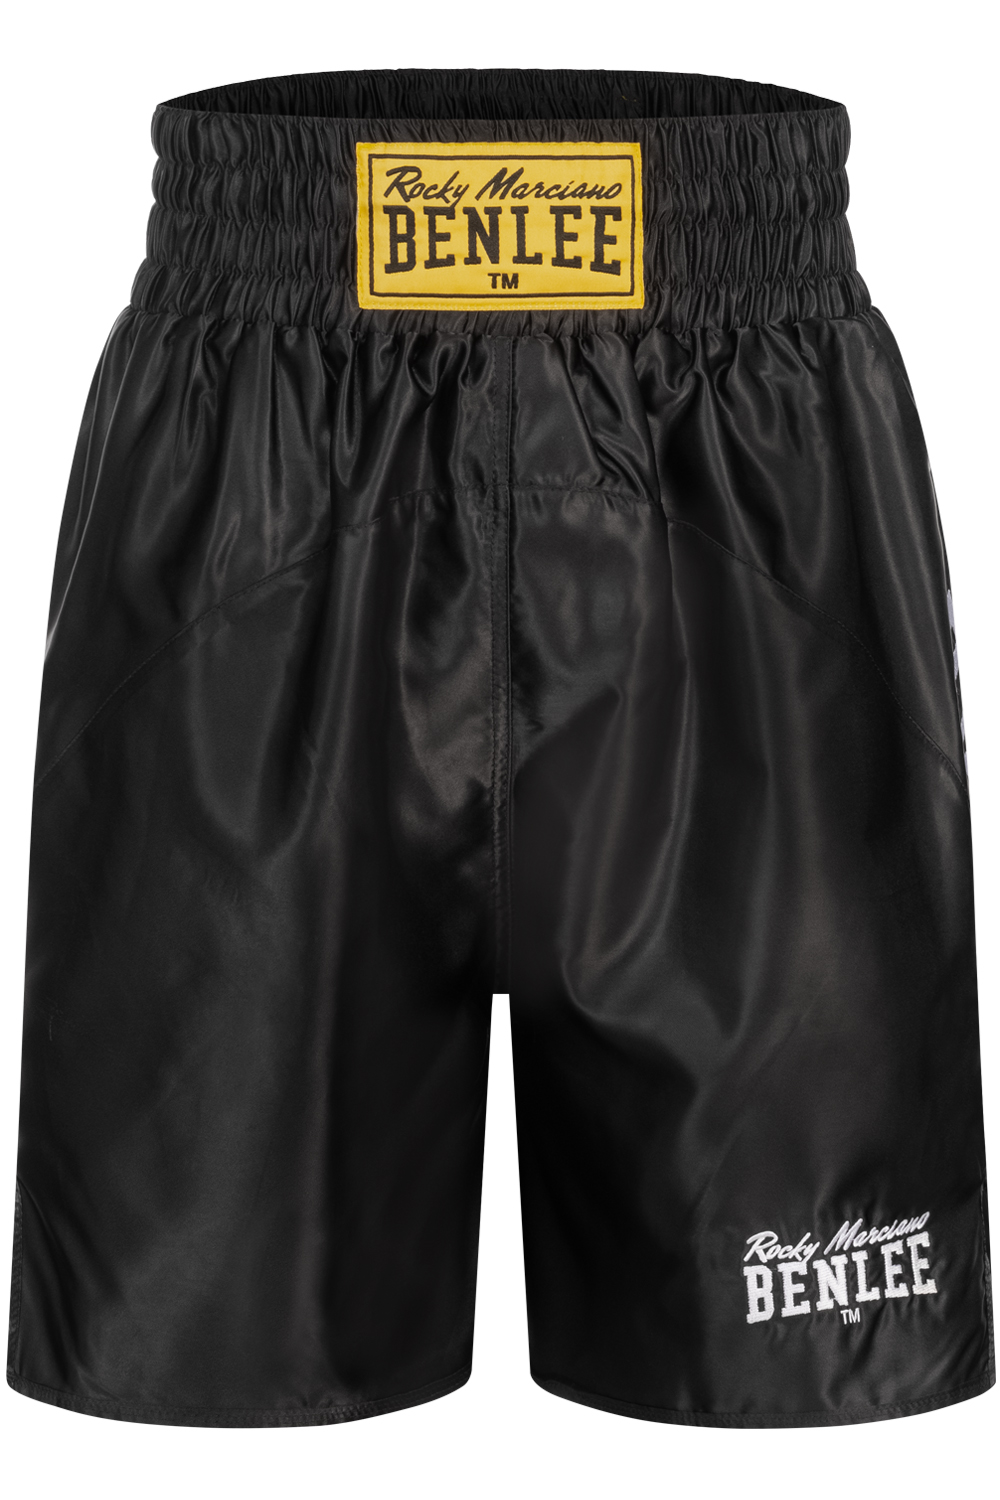 Lonsdale Men's boxing trunks